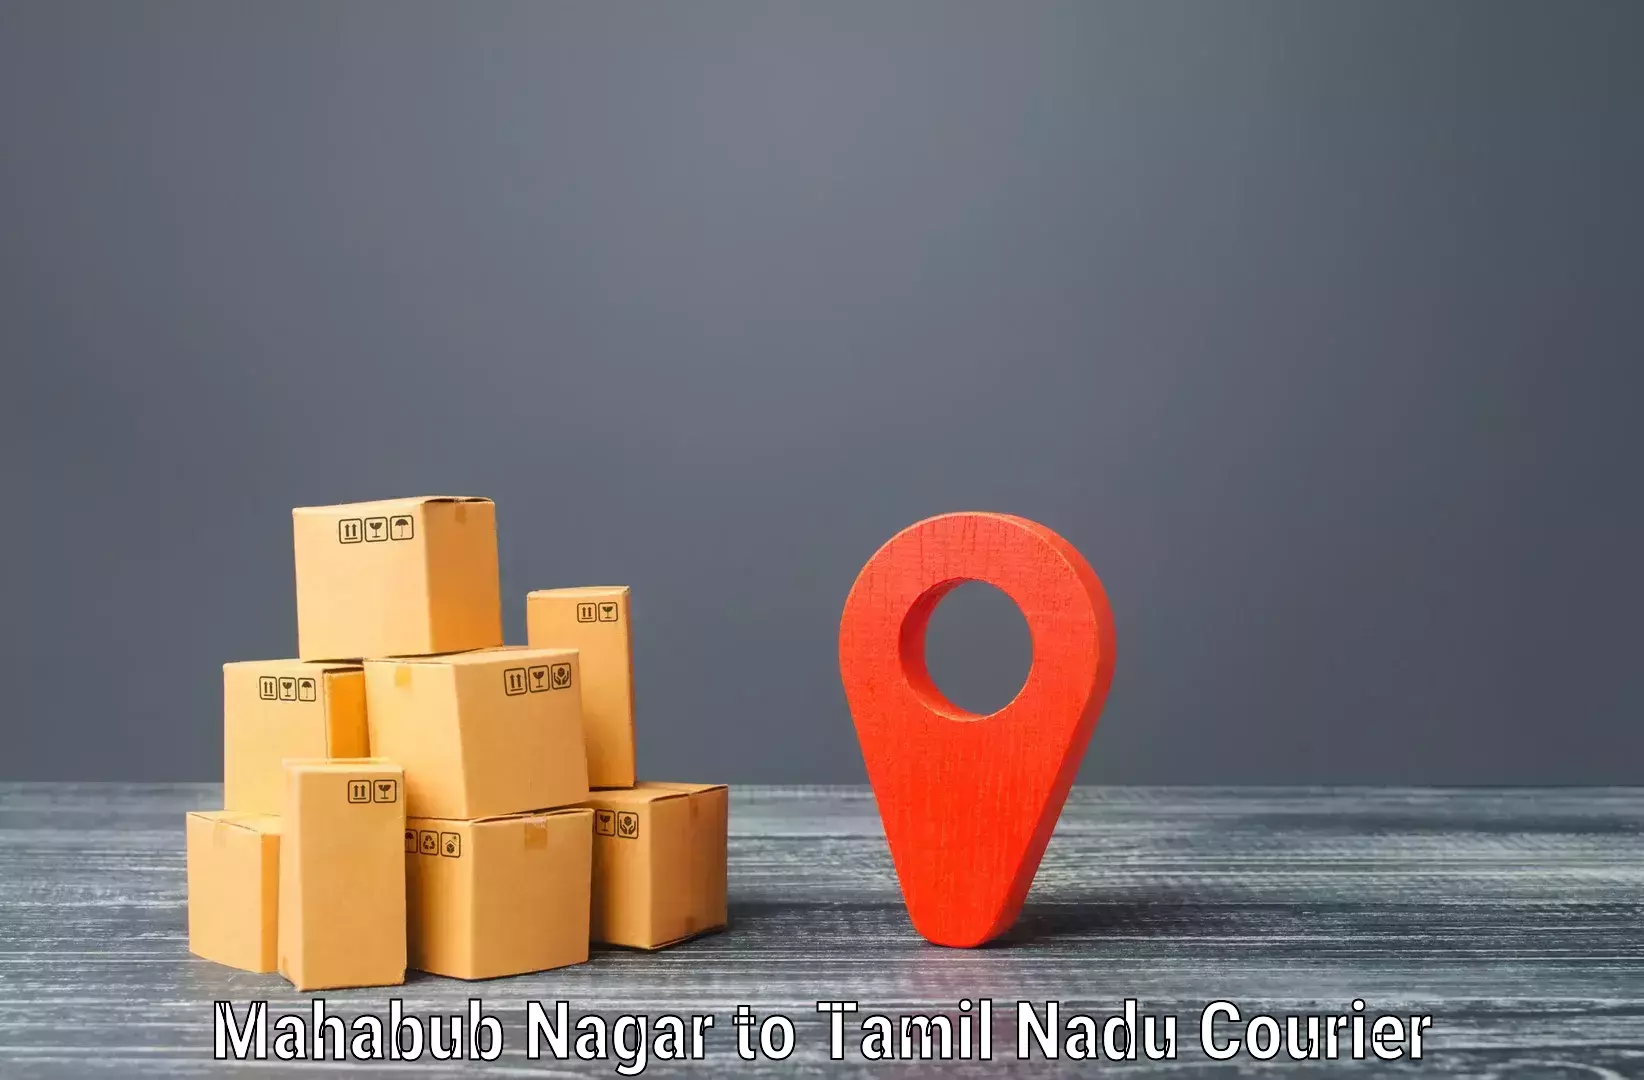 Affordable international shipping in Mahabub Nagar to Chennai Port